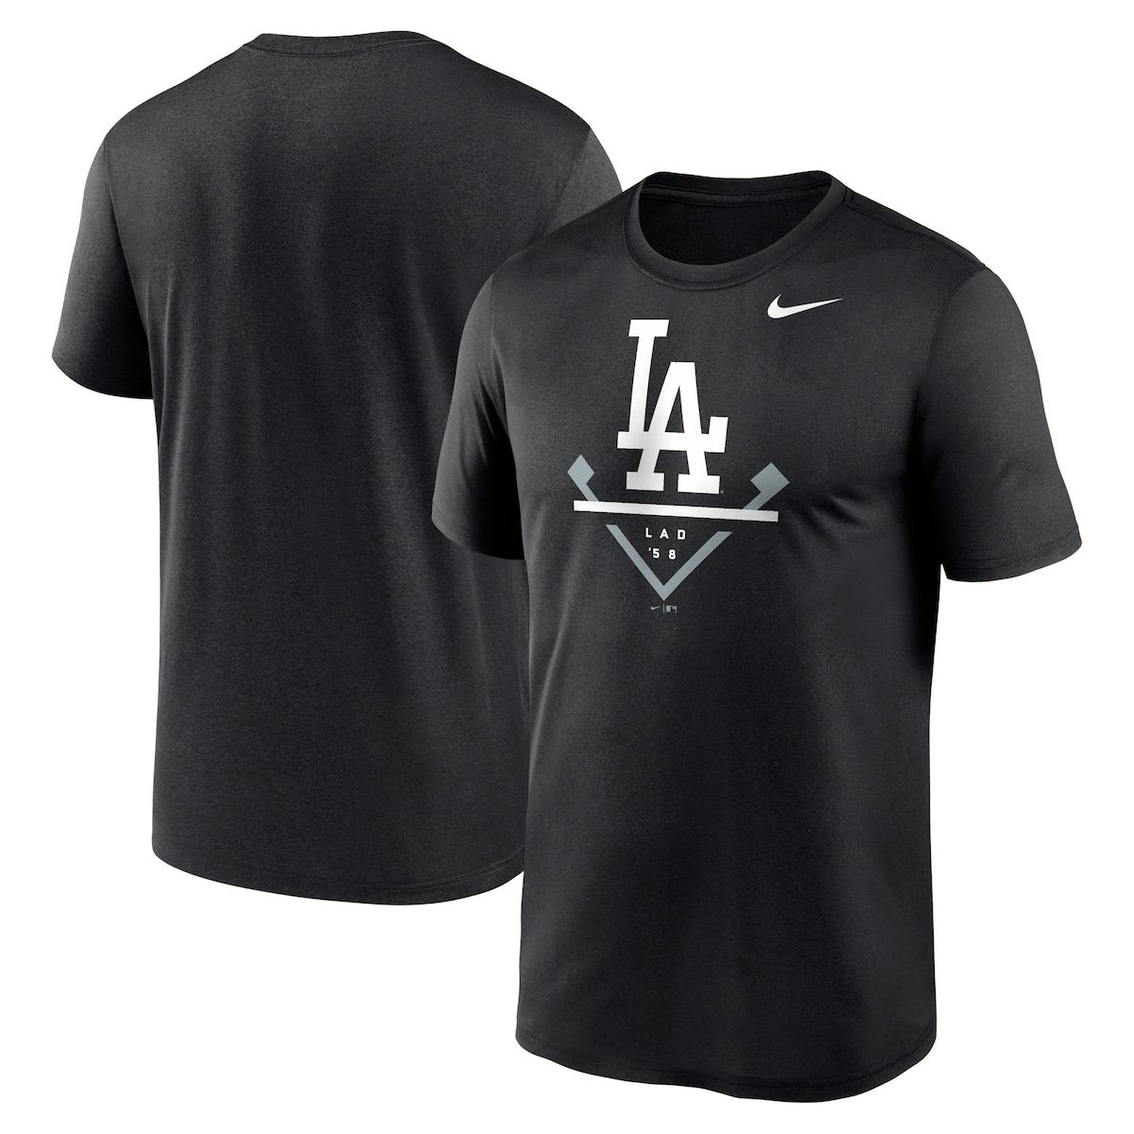 Nike Men's Black Los Angeles Dodgers Icon Legend Performance T-Shirt - Image 2 of 4